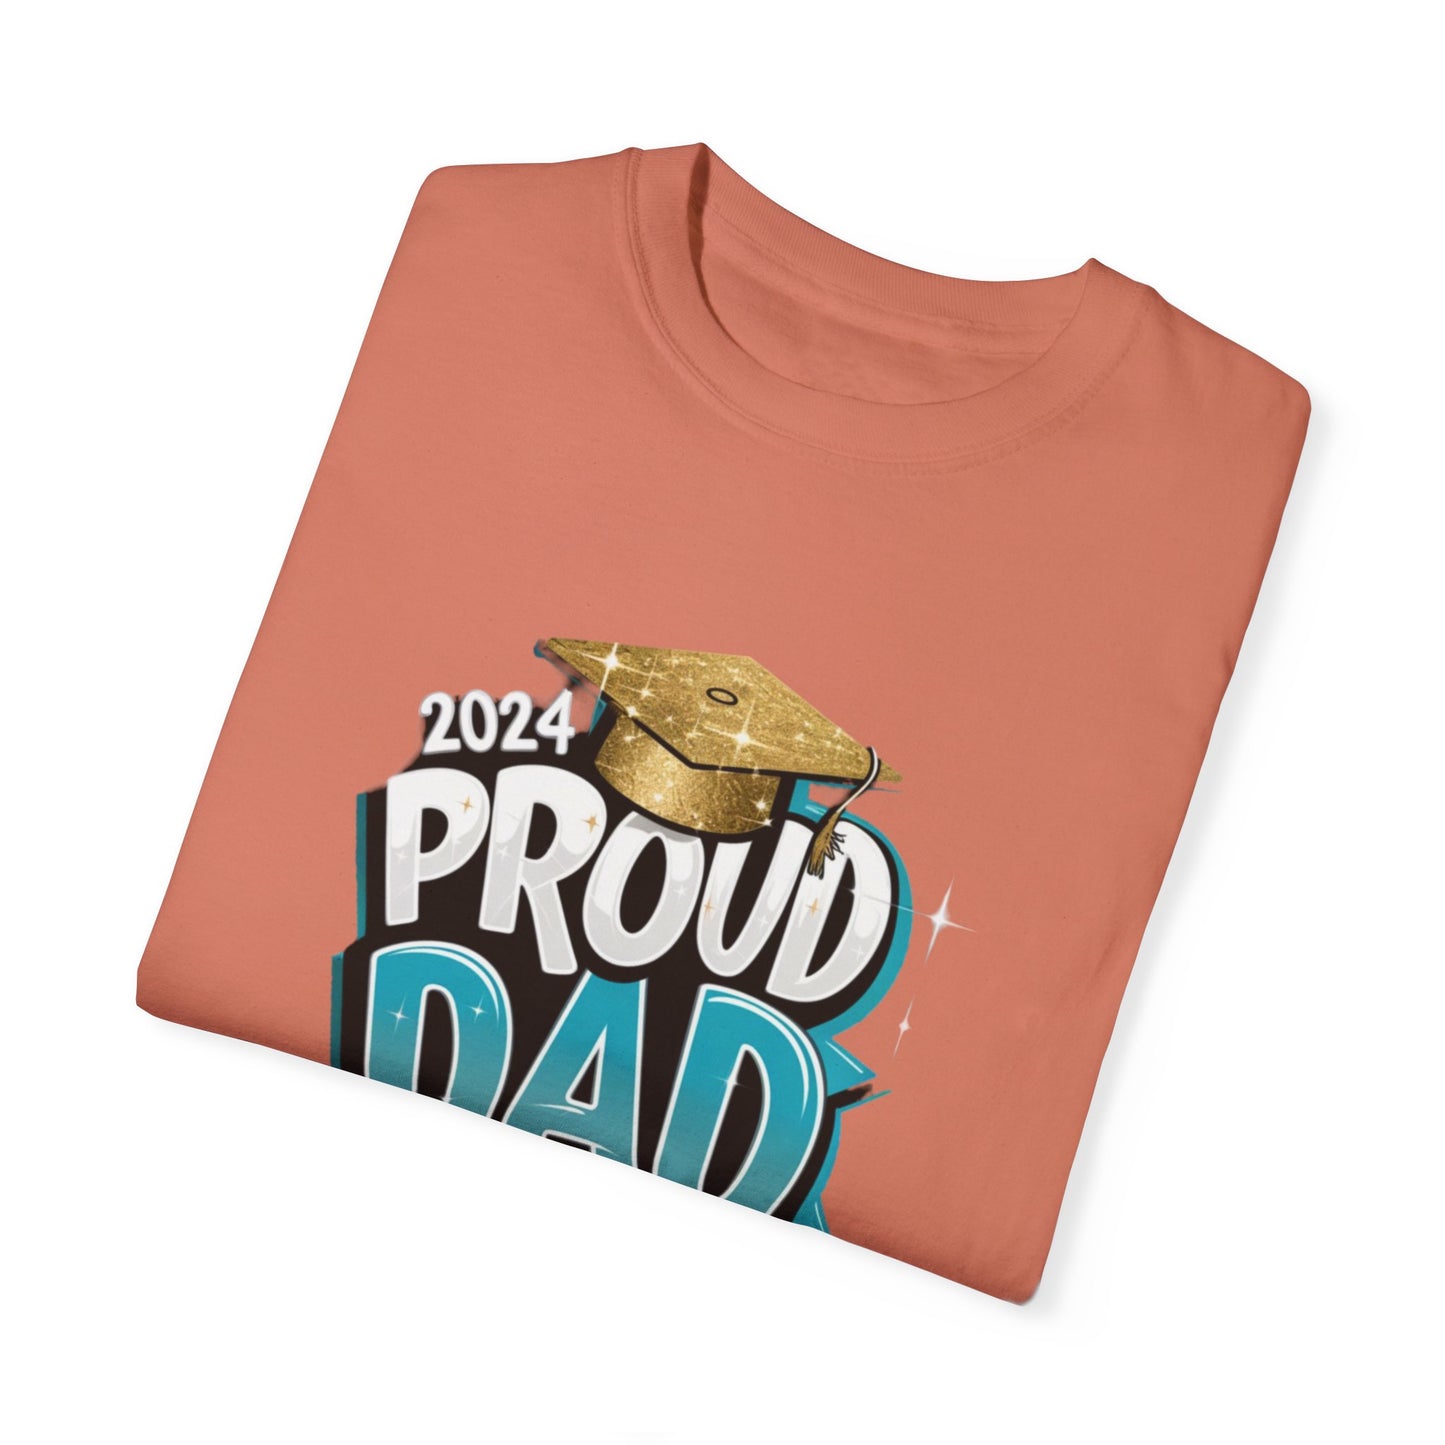 Proud Dad of a 2024 Graduate Unisex Garment-dyed T-shirt Cotton Funny Humorous Graphic Soft Premium Unisex Men Women Terracotta T-shirt Birthday Gift-56